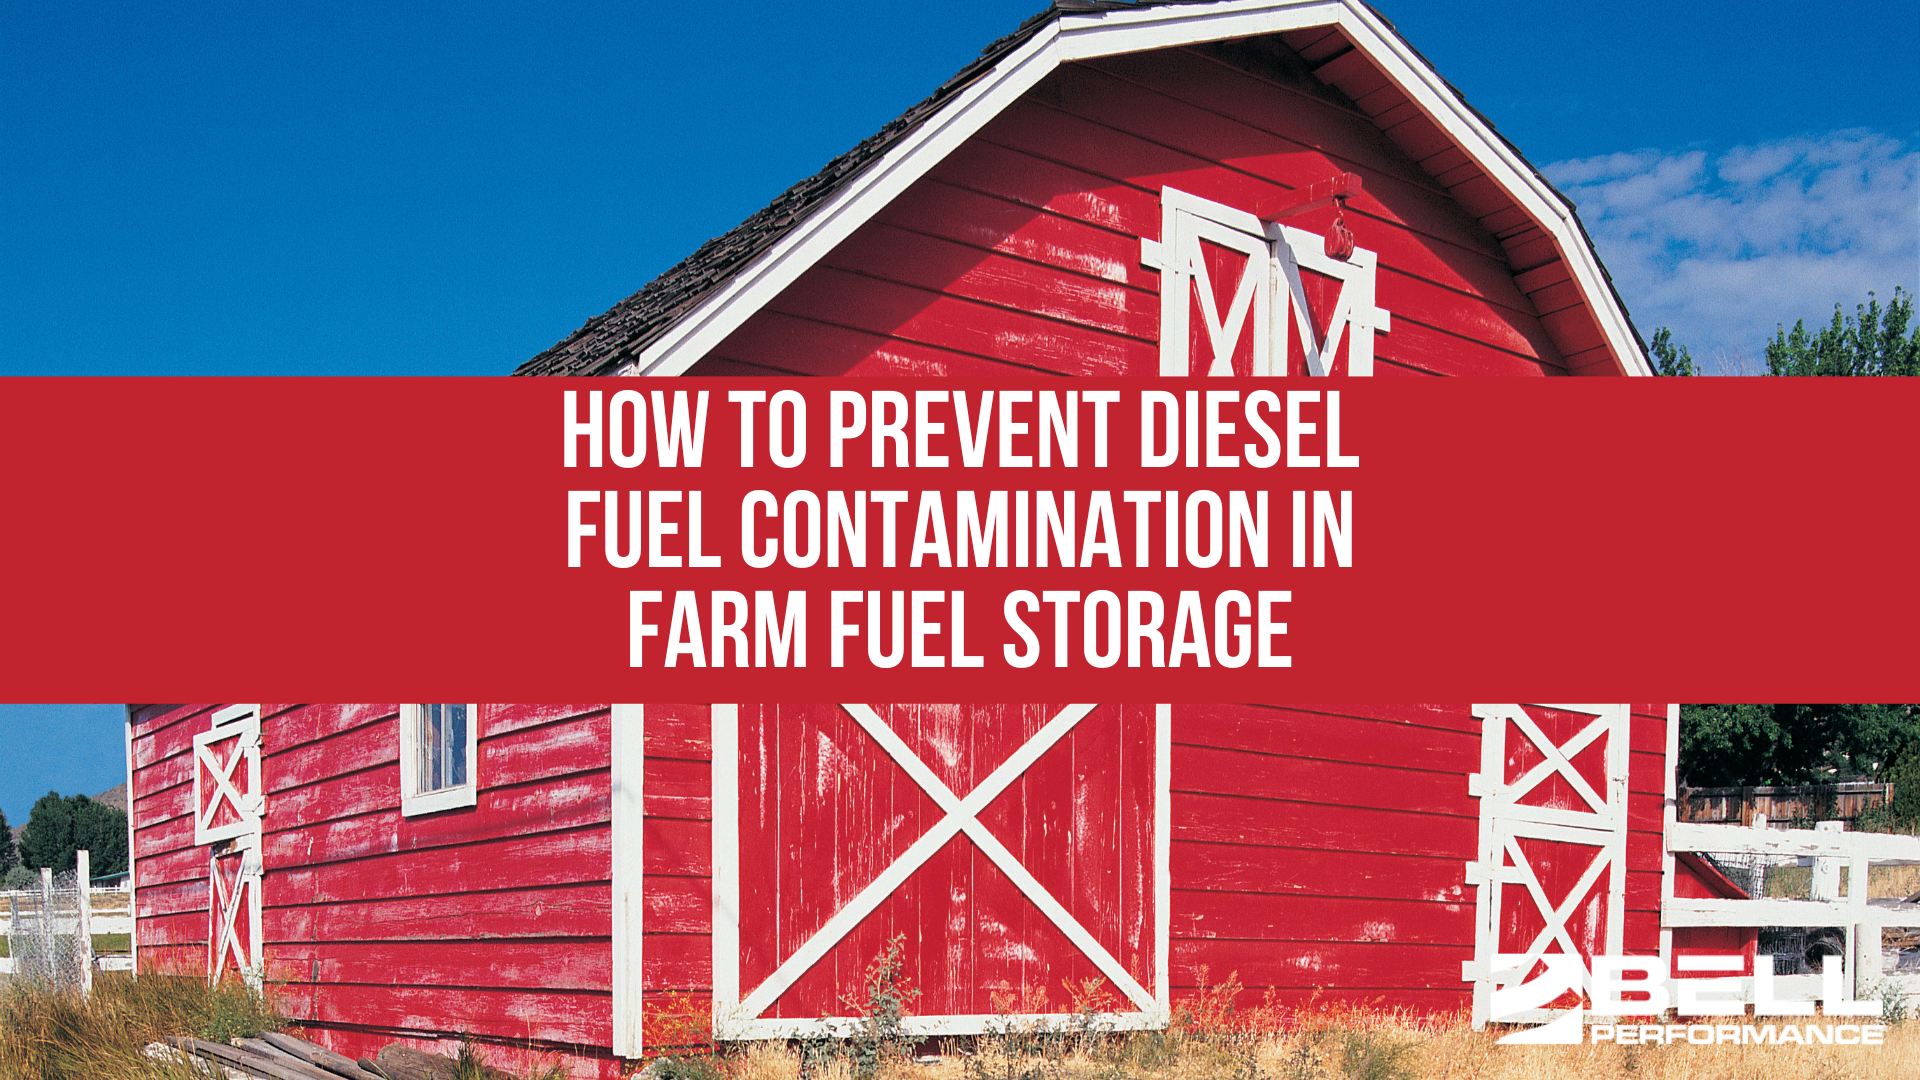 How to Prevent Diesel Fuel Contamination in Farm Fuel Storage